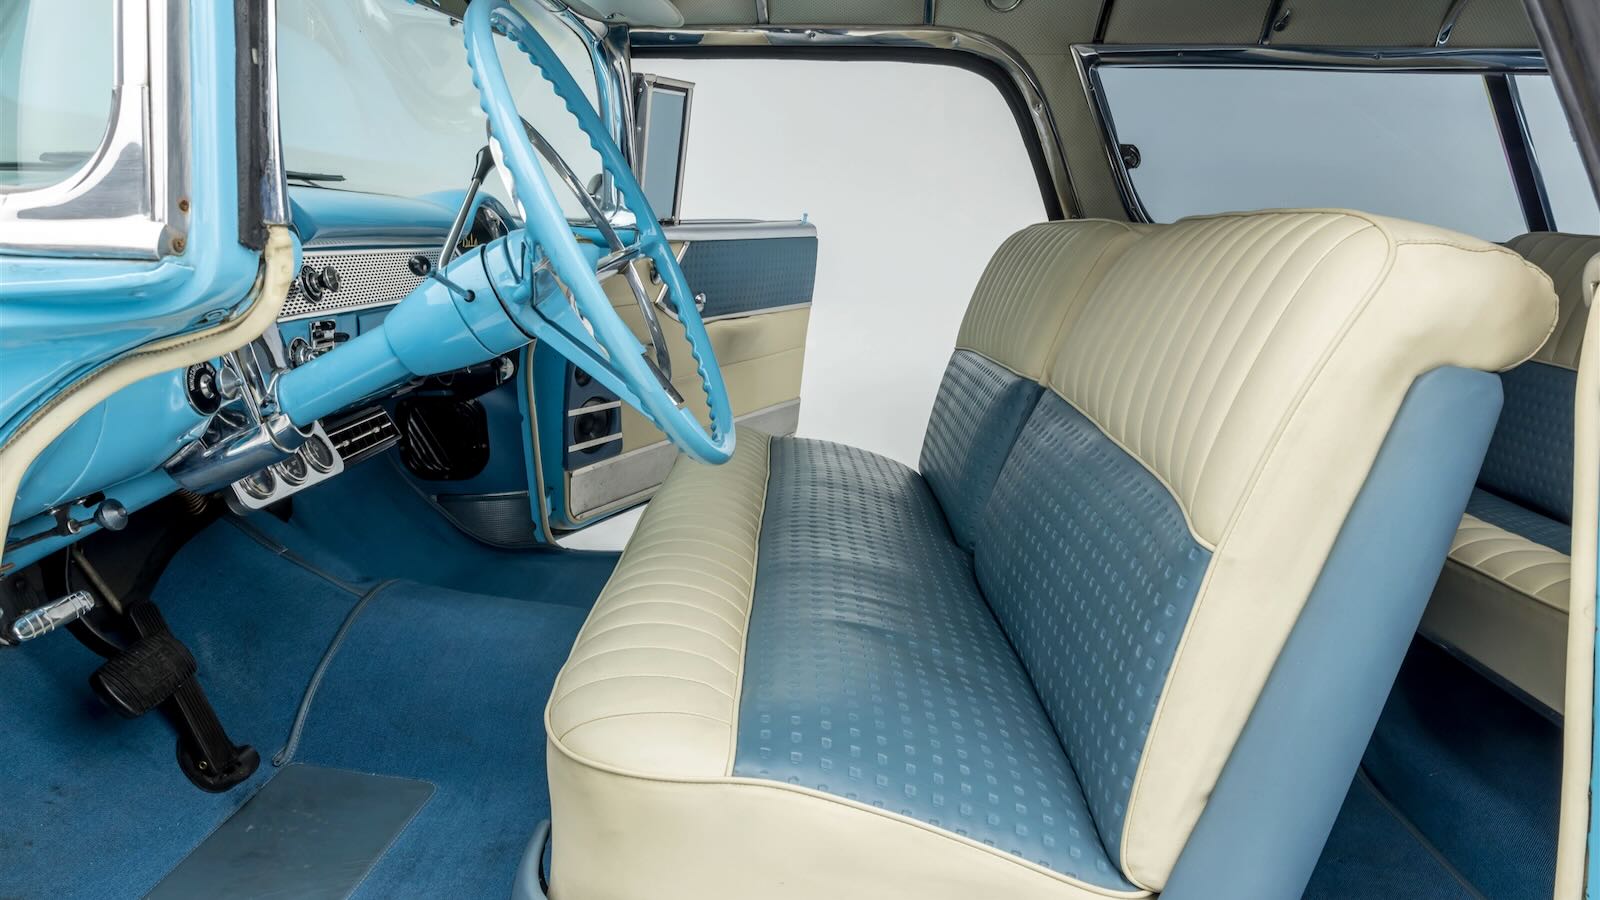 Chevrolet-Bel-Air-Nomad-1955-interior-2.